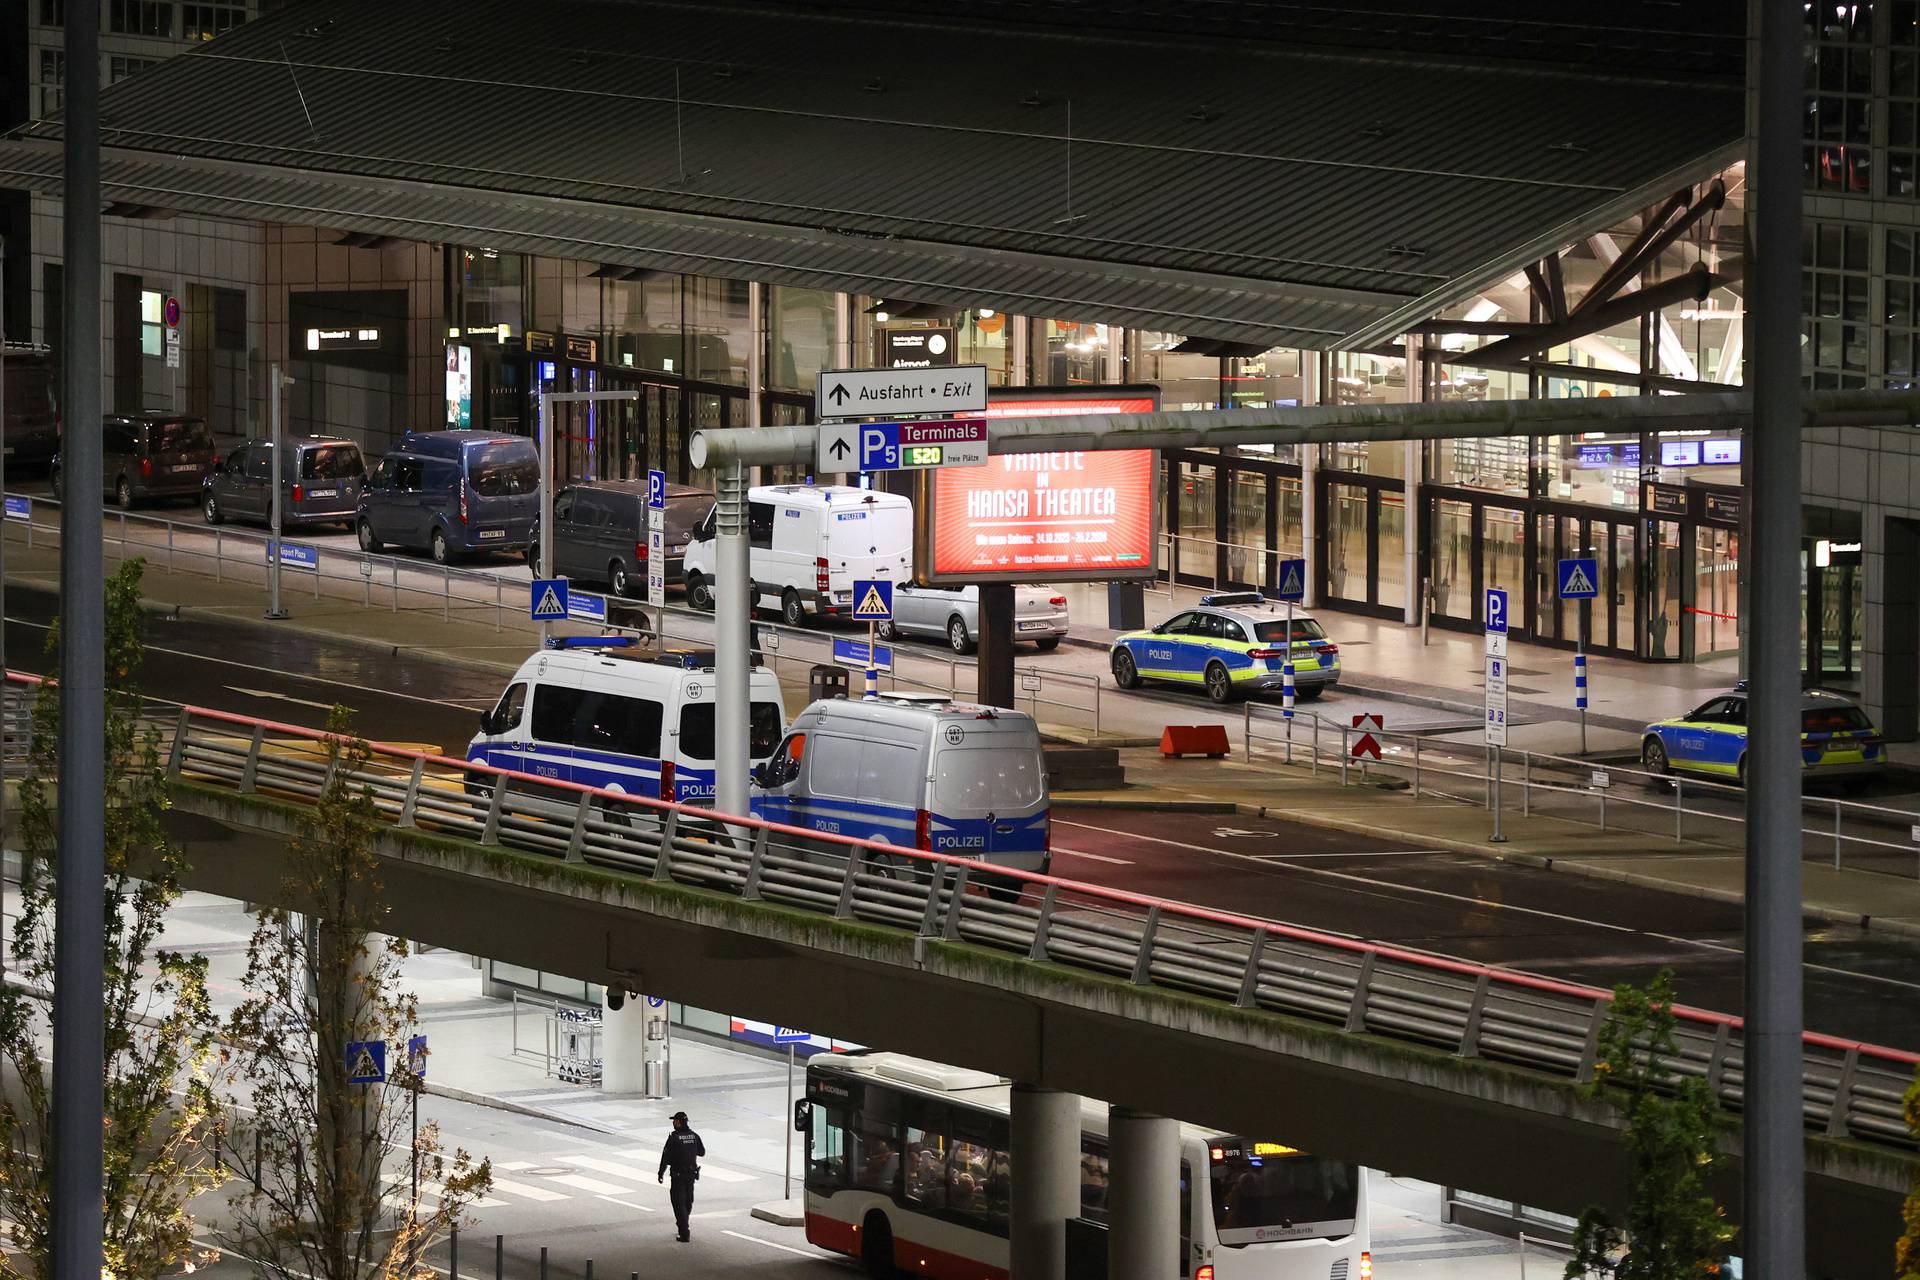 Hamburg airport closed - armed man broke through gate